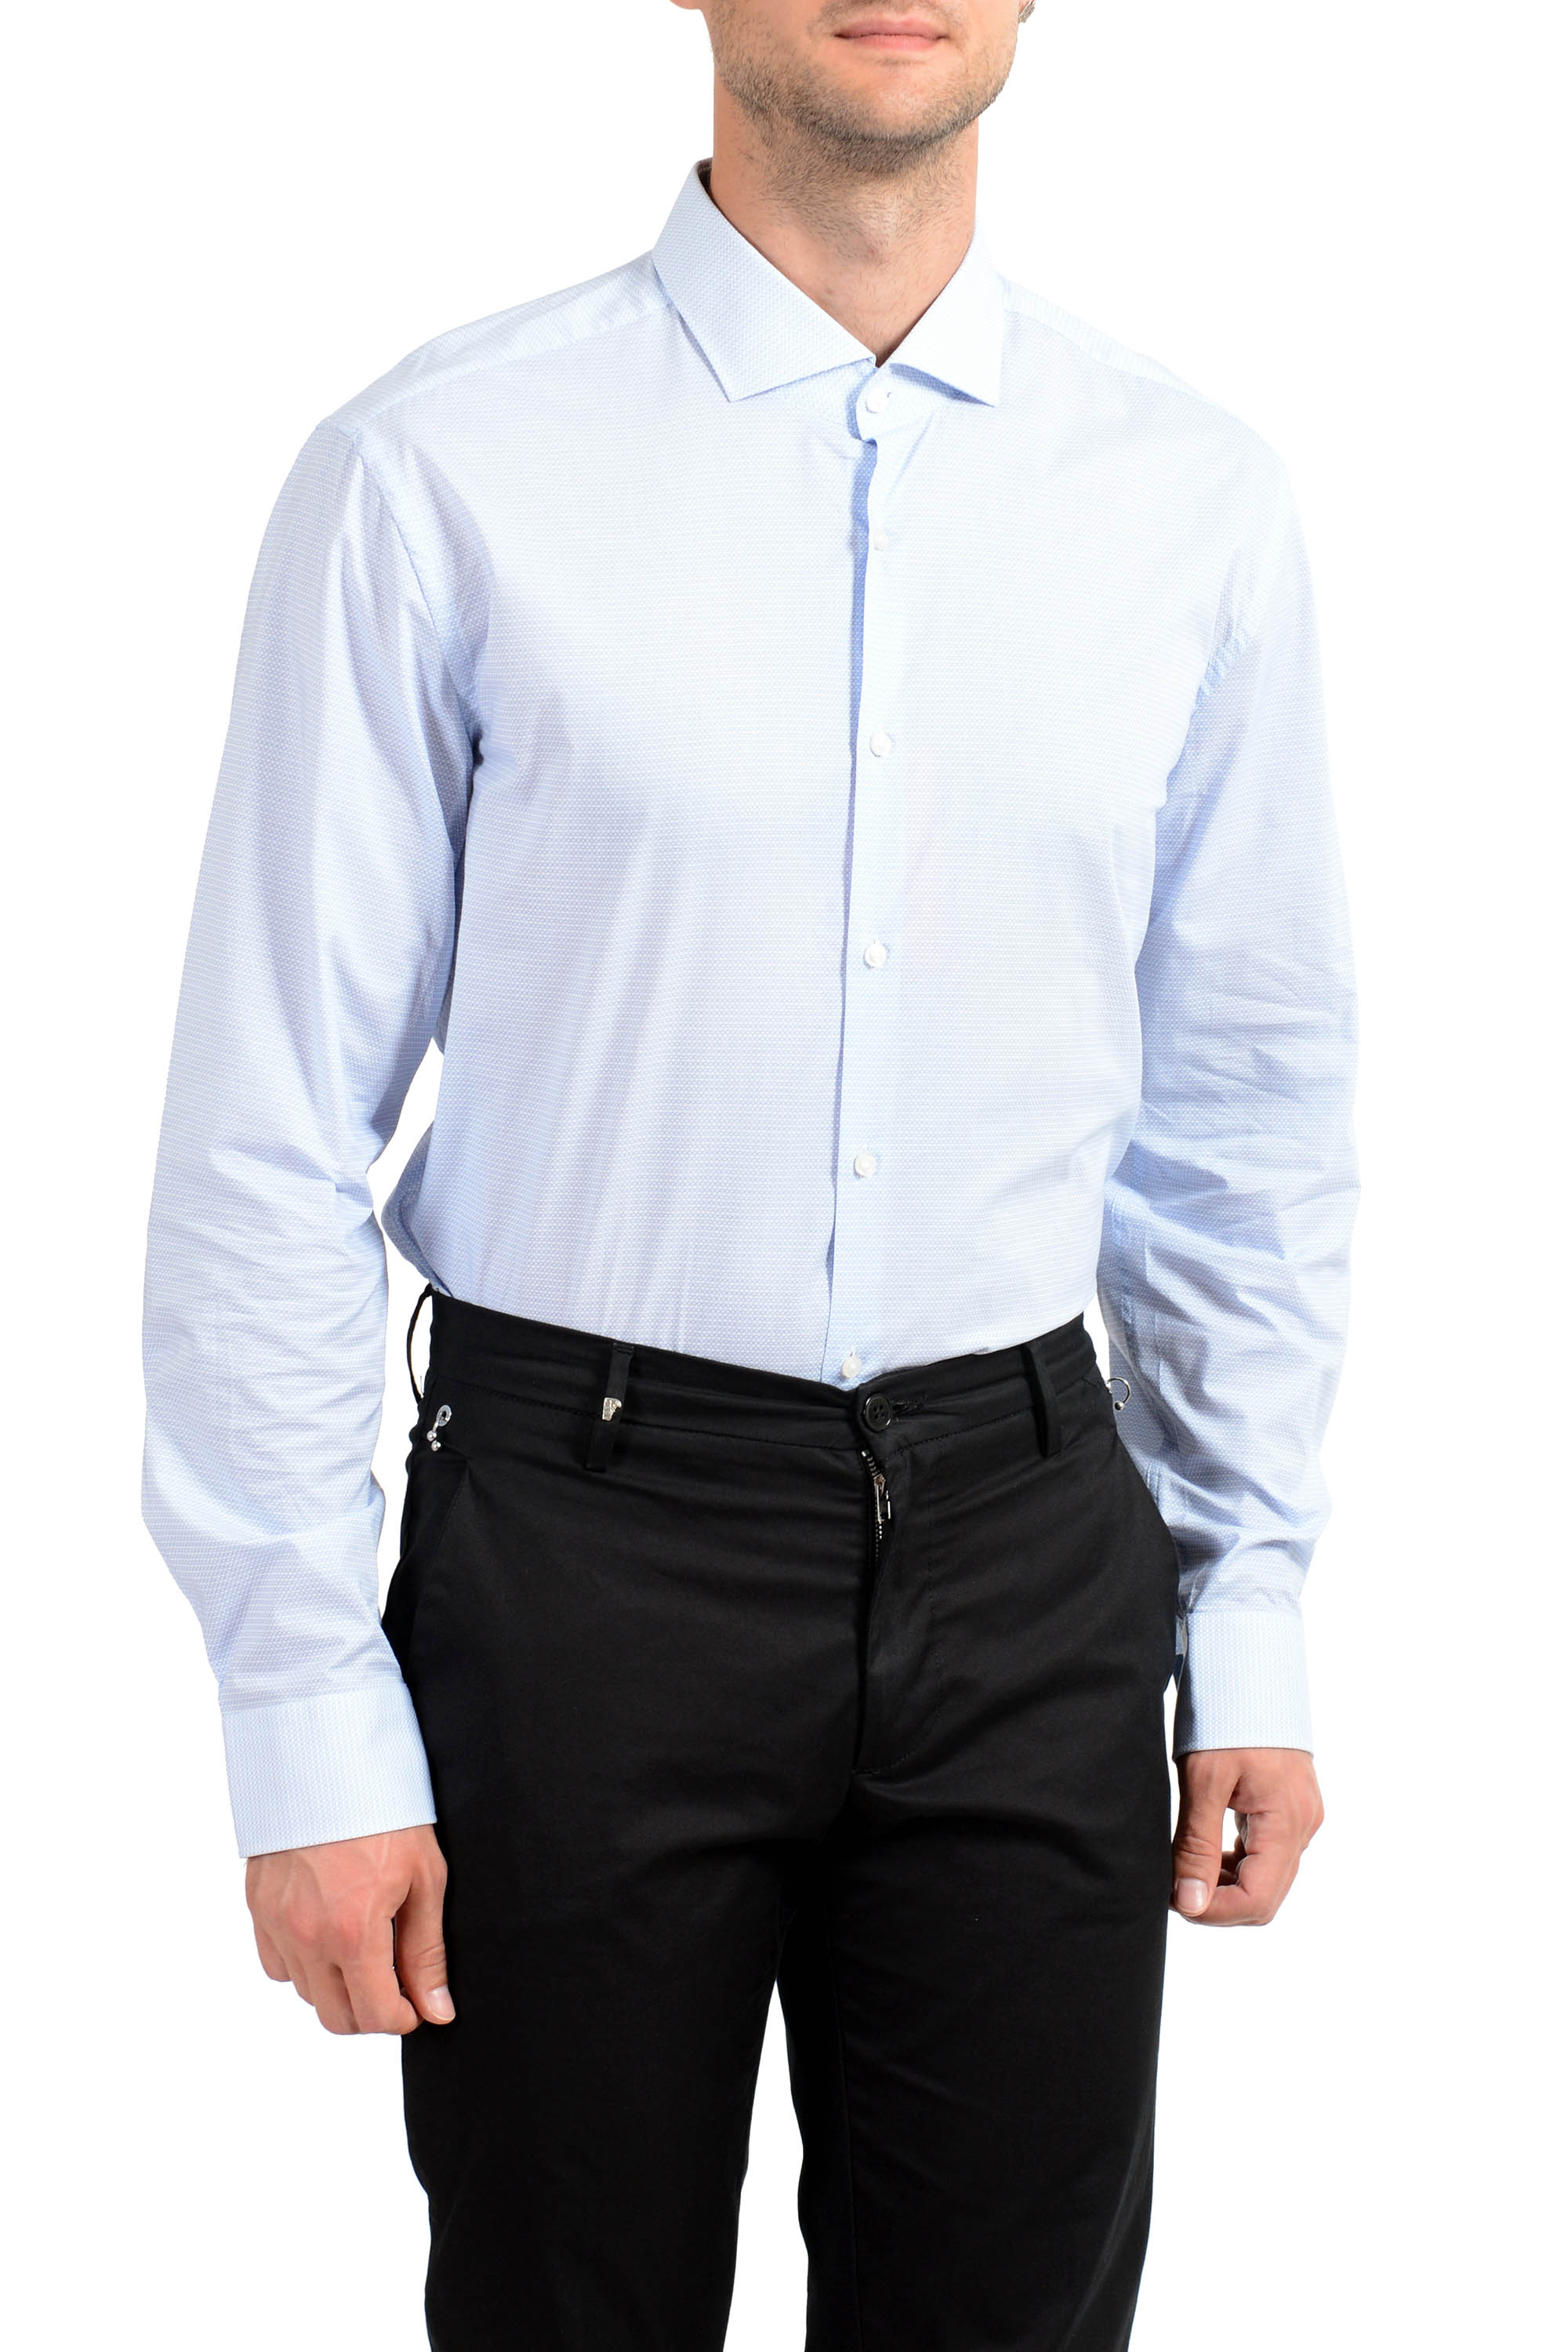 top ventilatie tyfoon Hugo Boss Men's "C-Jason" Slim Fit Long Sleeve Dress Shirt